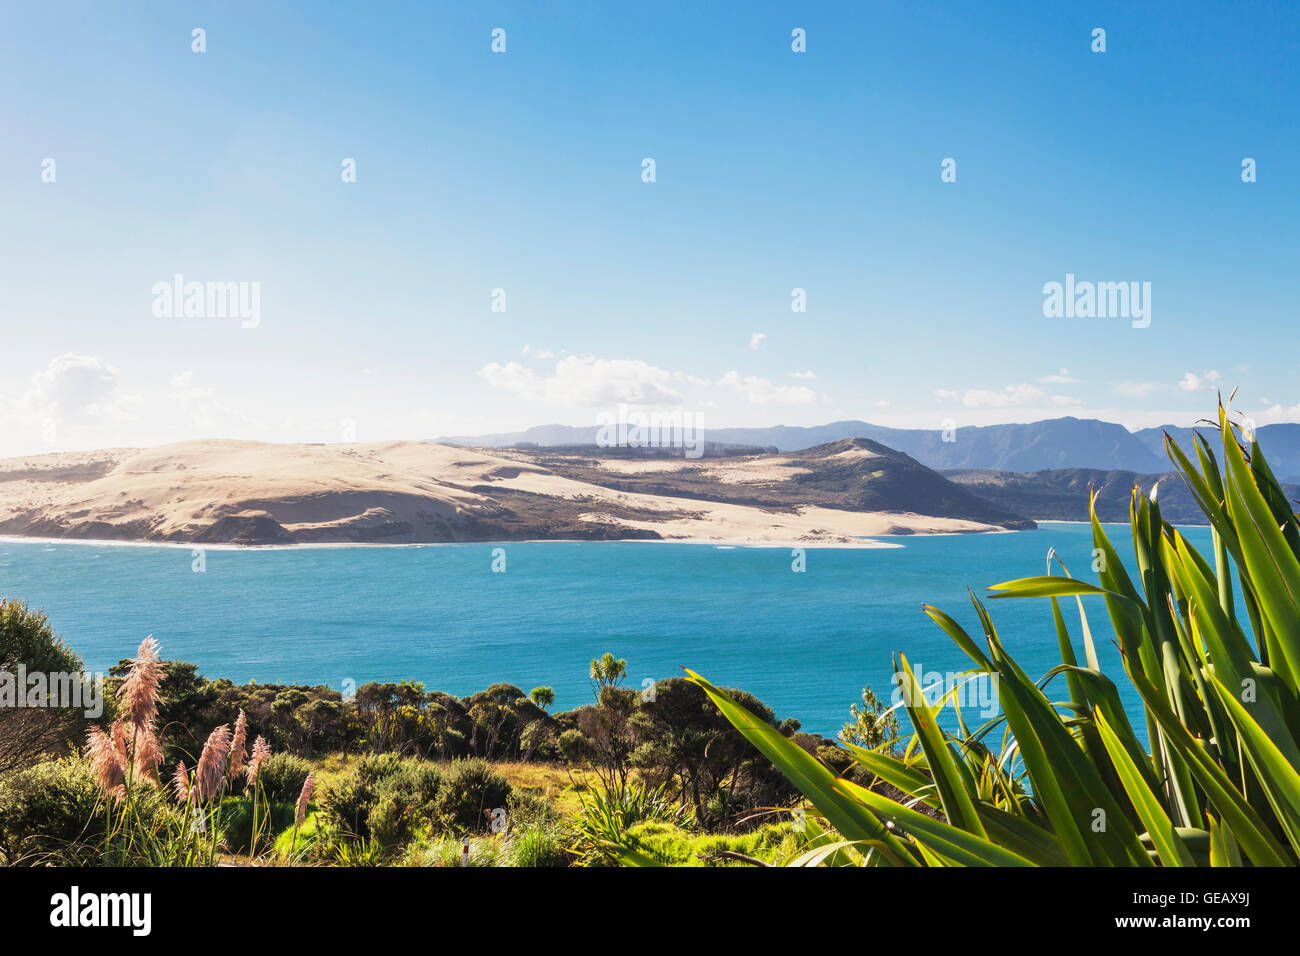 Nuova Zelanda, Isola del nord, Northland, Hokianga Harbour e nord Capo gigantesche dune di sabbia, Nuova Zelanda Lino, Phormium tenax Foto Stock